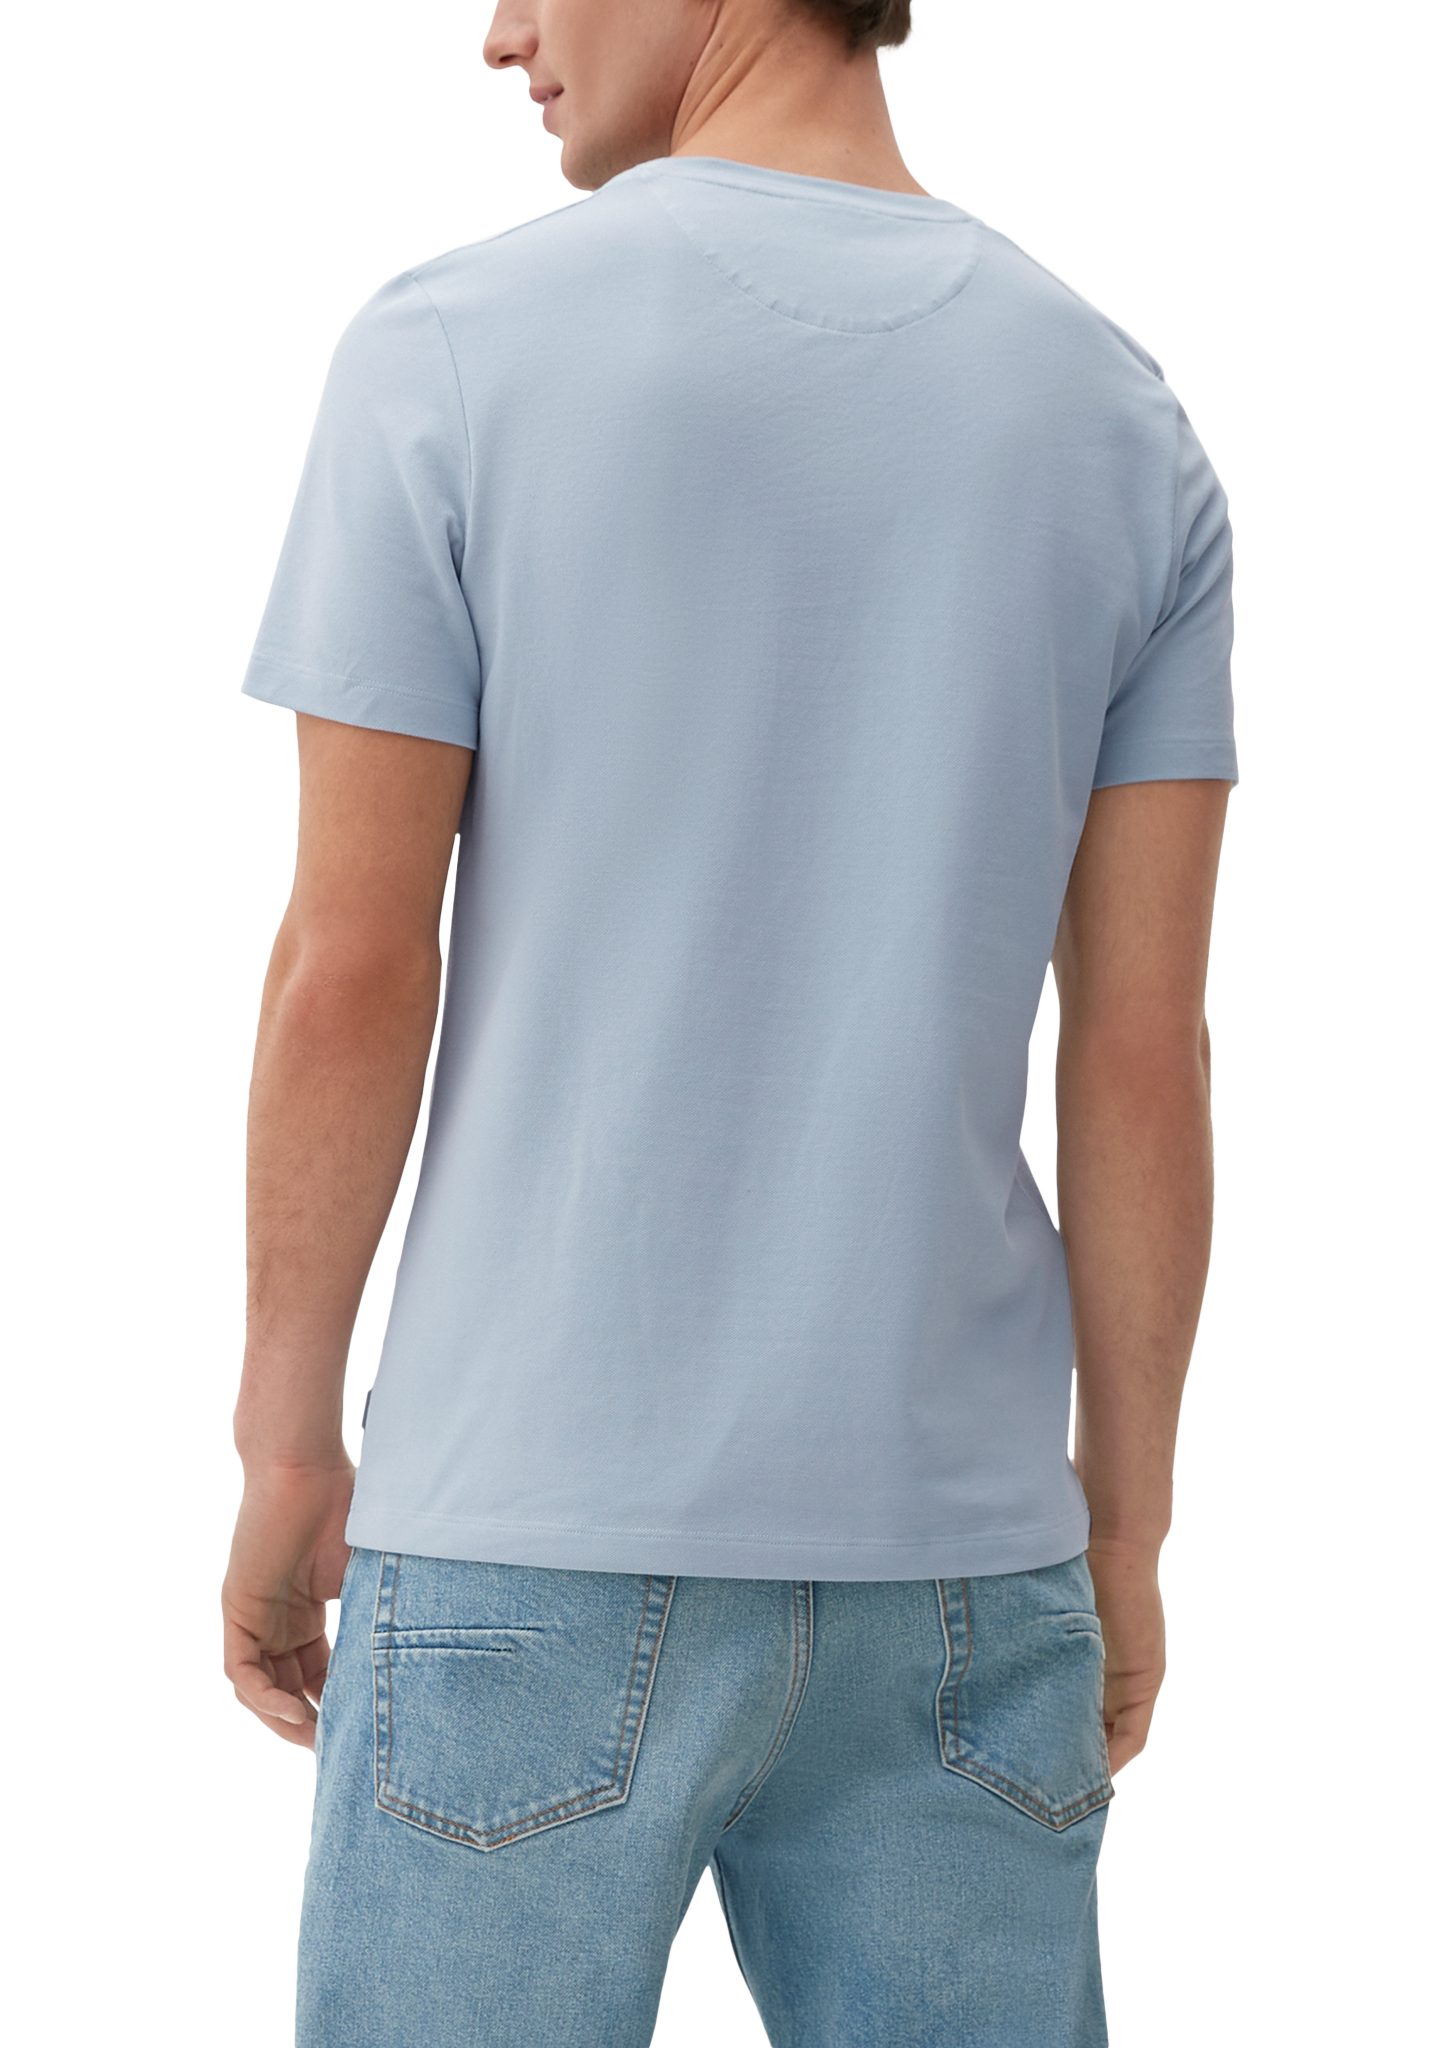 hellblau s.Oliver Piqué-Struktur Kurzarmshirt T-Shirt mit